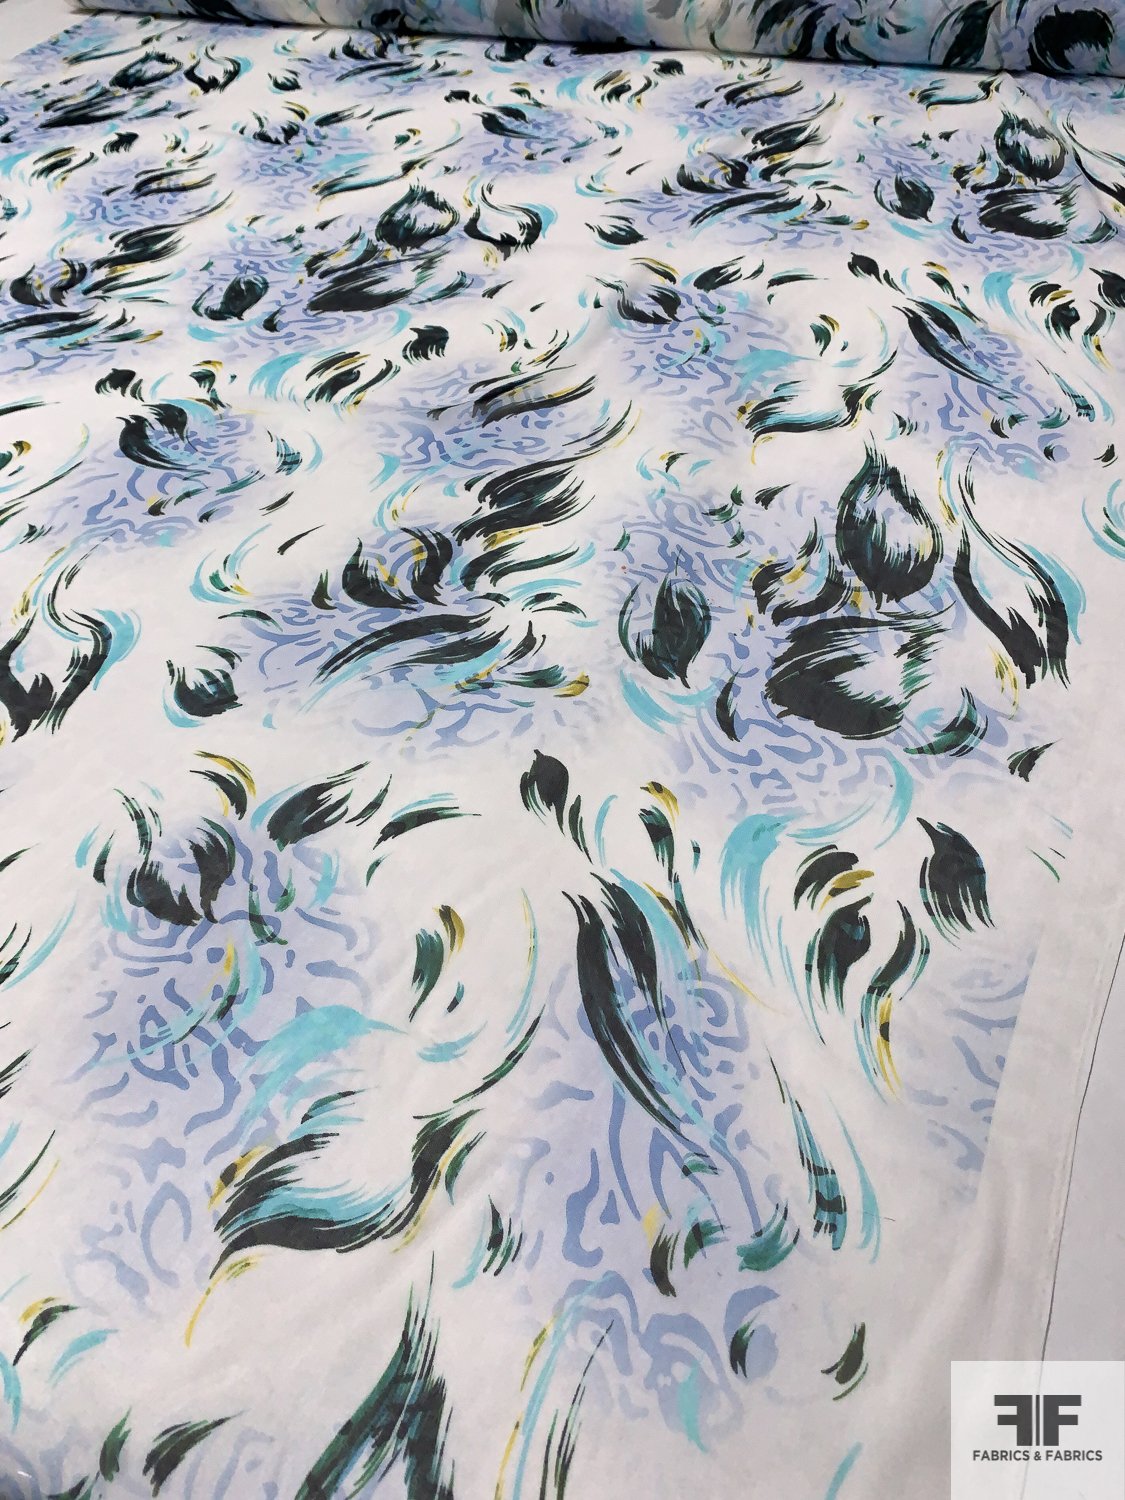 Painterly Brushstrokes Printed Silk Chiffon - Off-White / Seafoam / Periwinke / Black